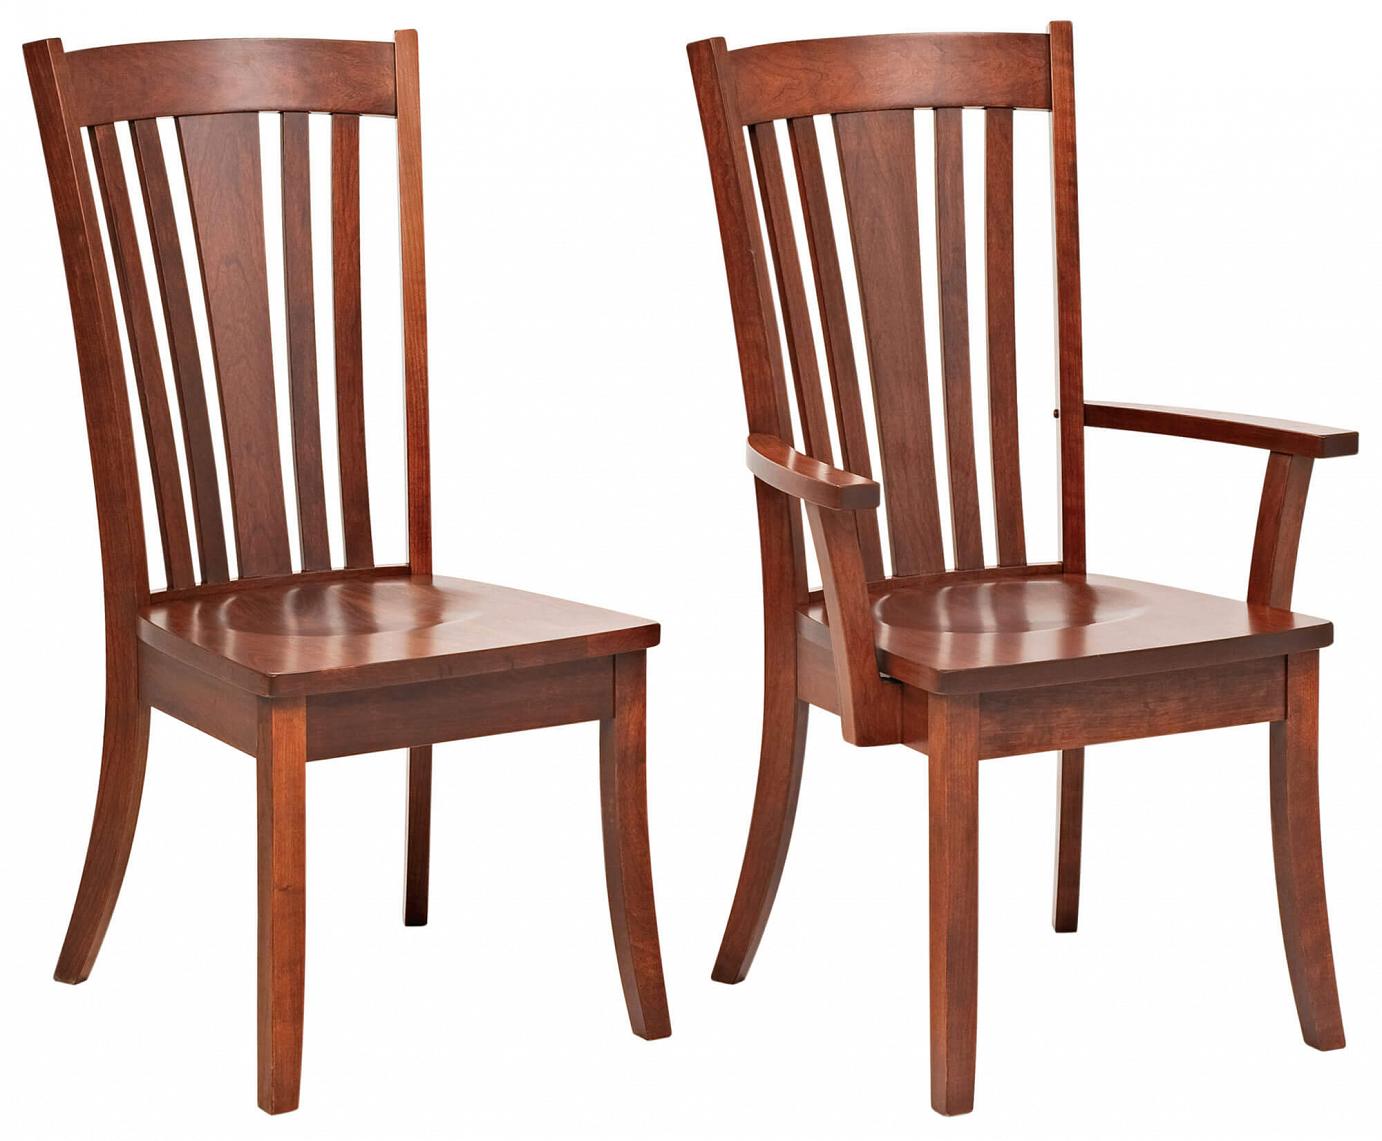 RH Yoder Madison Chairs